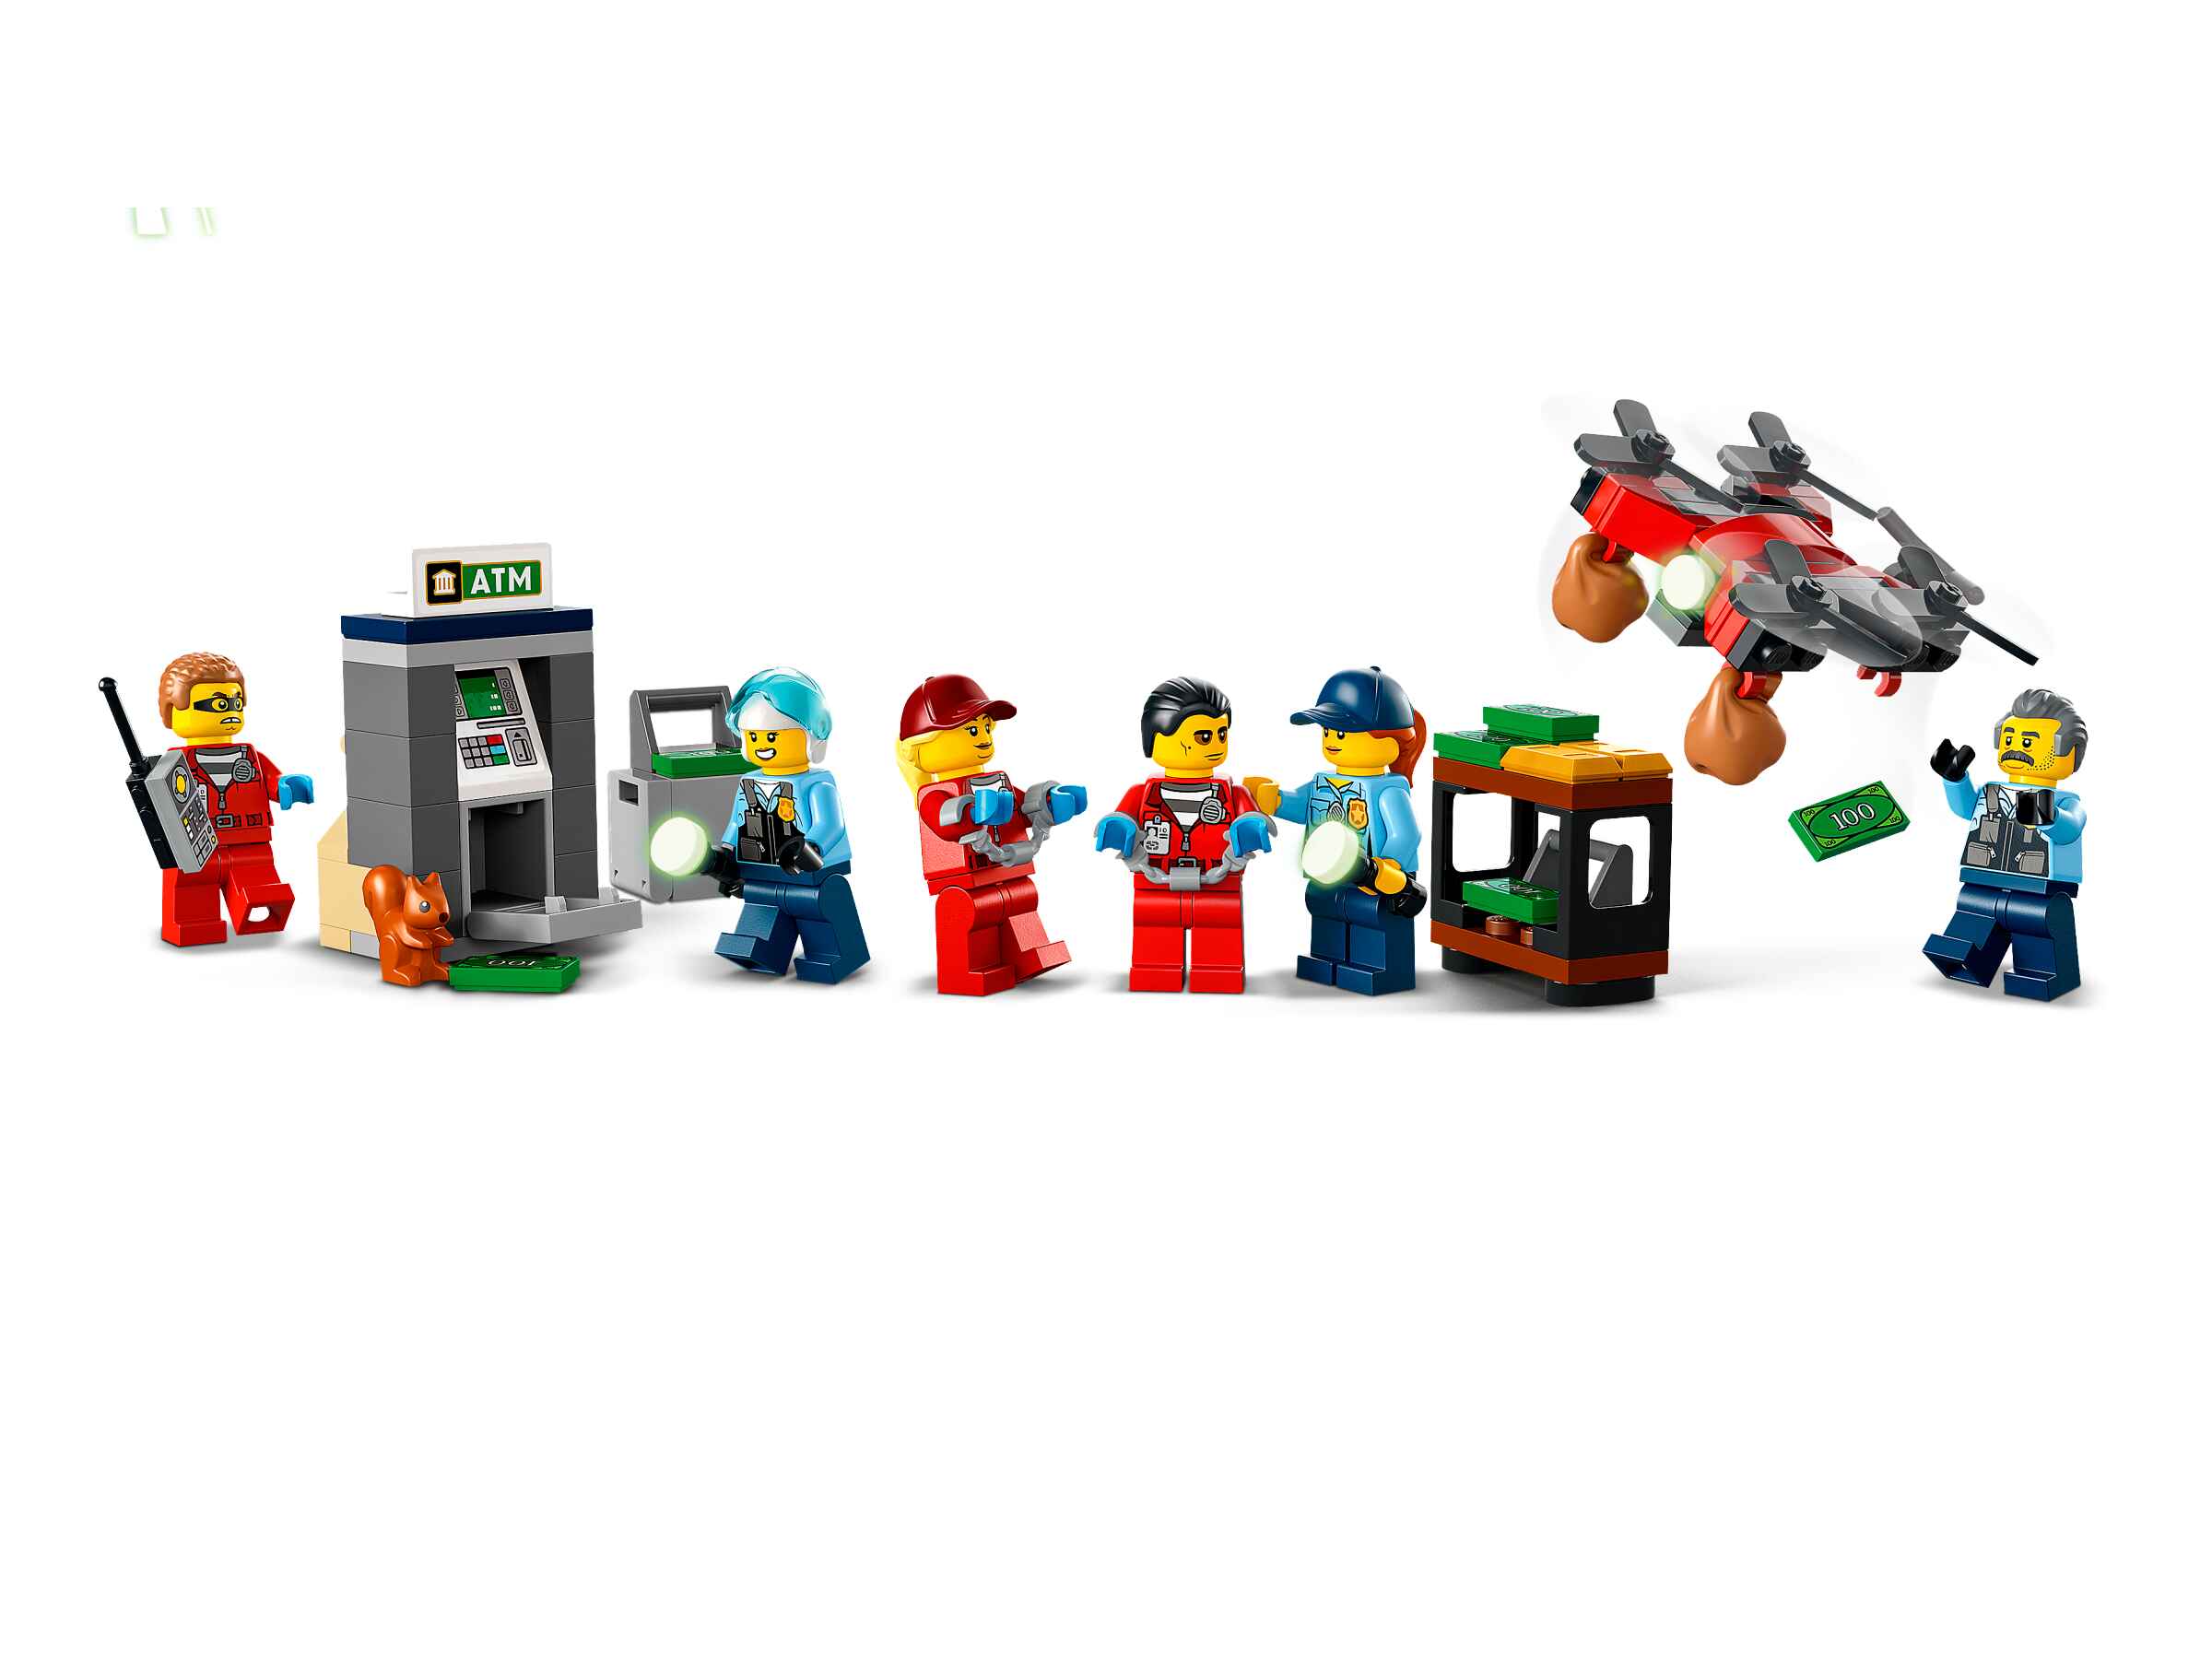 LEGO 60317 City Banküberfall mit Verfolgungsjagd, LKW, Hubschrauber, 6 Figuren